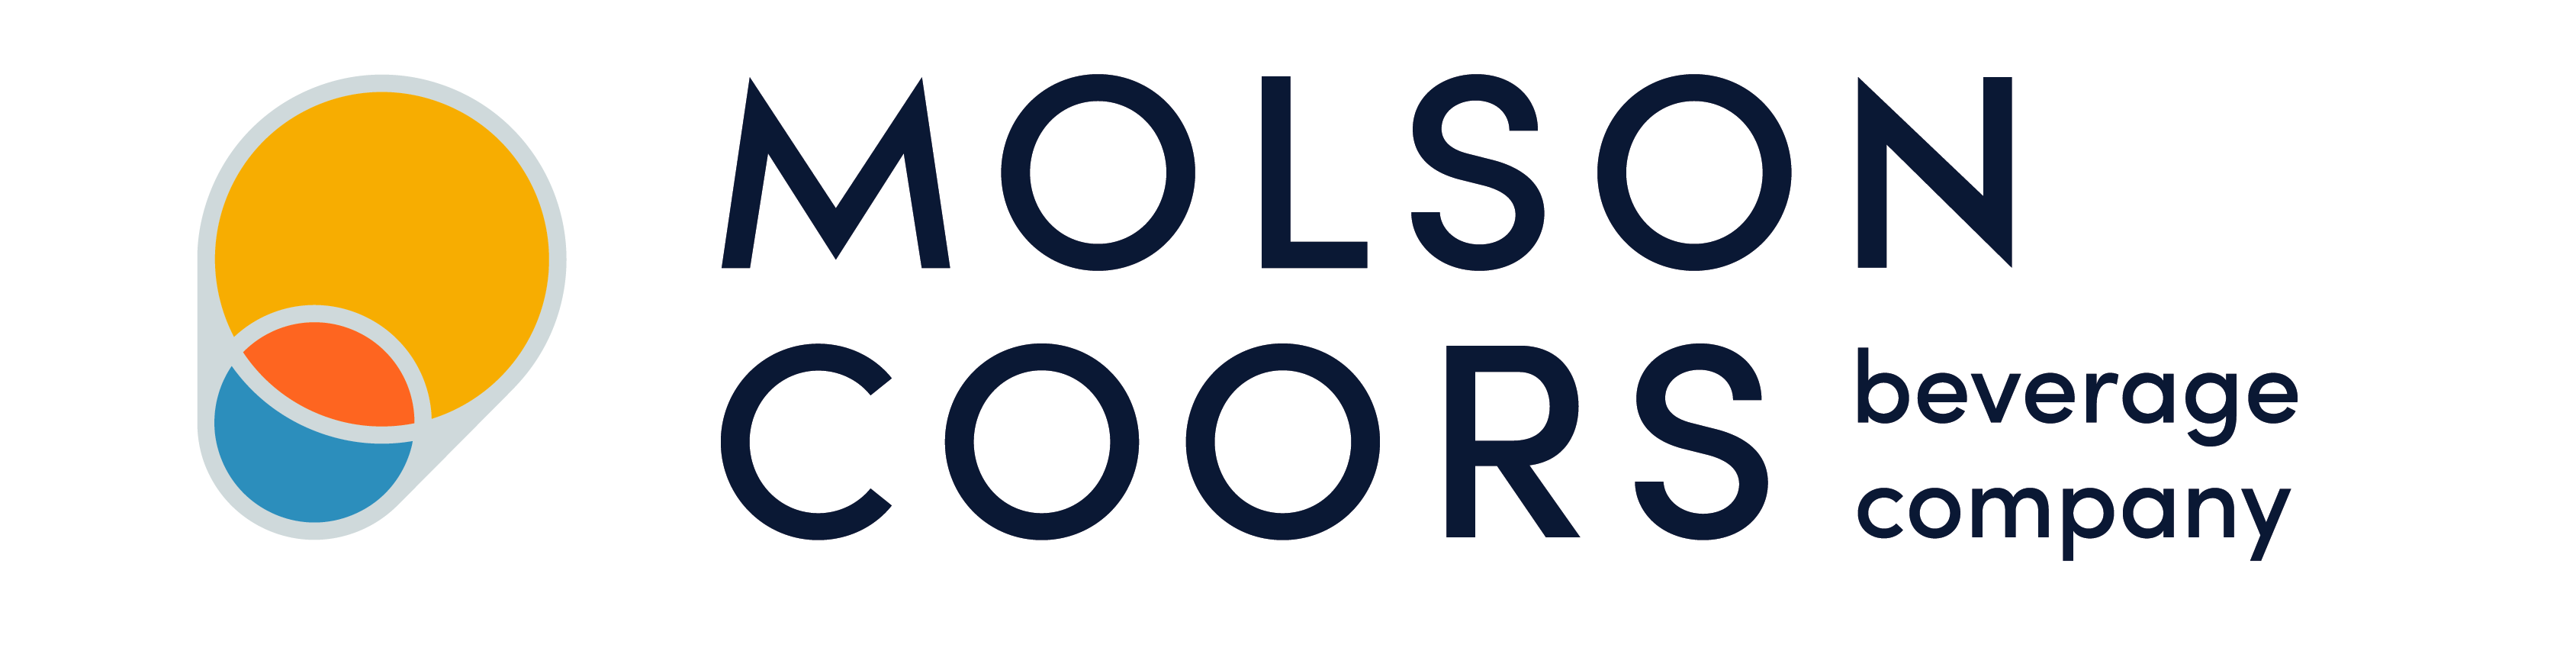 Molson-Coors-Logo-ON-WHITE-01